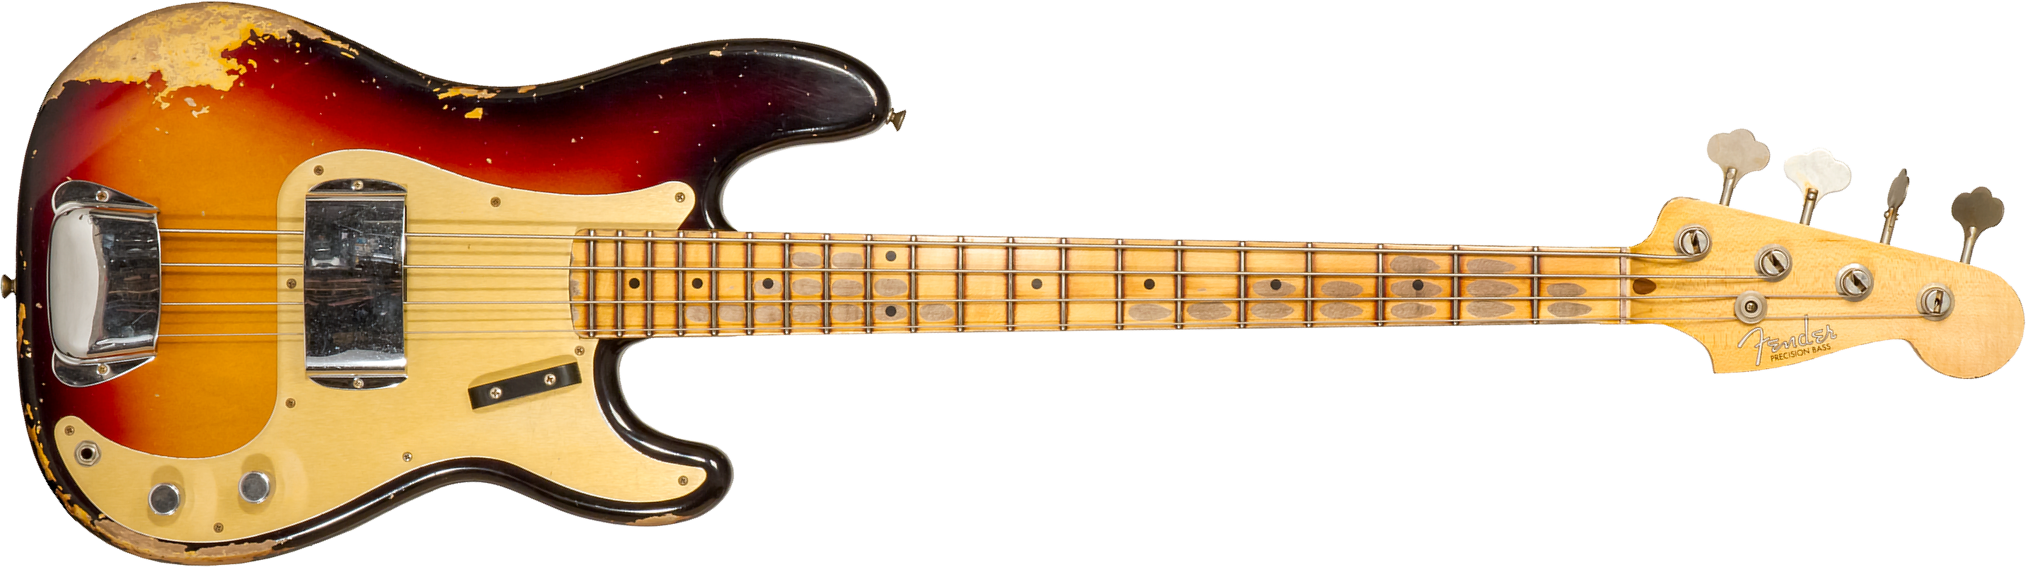 Fender Custom Shop Precision Bass 1958 Mn #cz573256 - Heavy Relic 3-color Sunburst - Solid body electric bass - Main picture